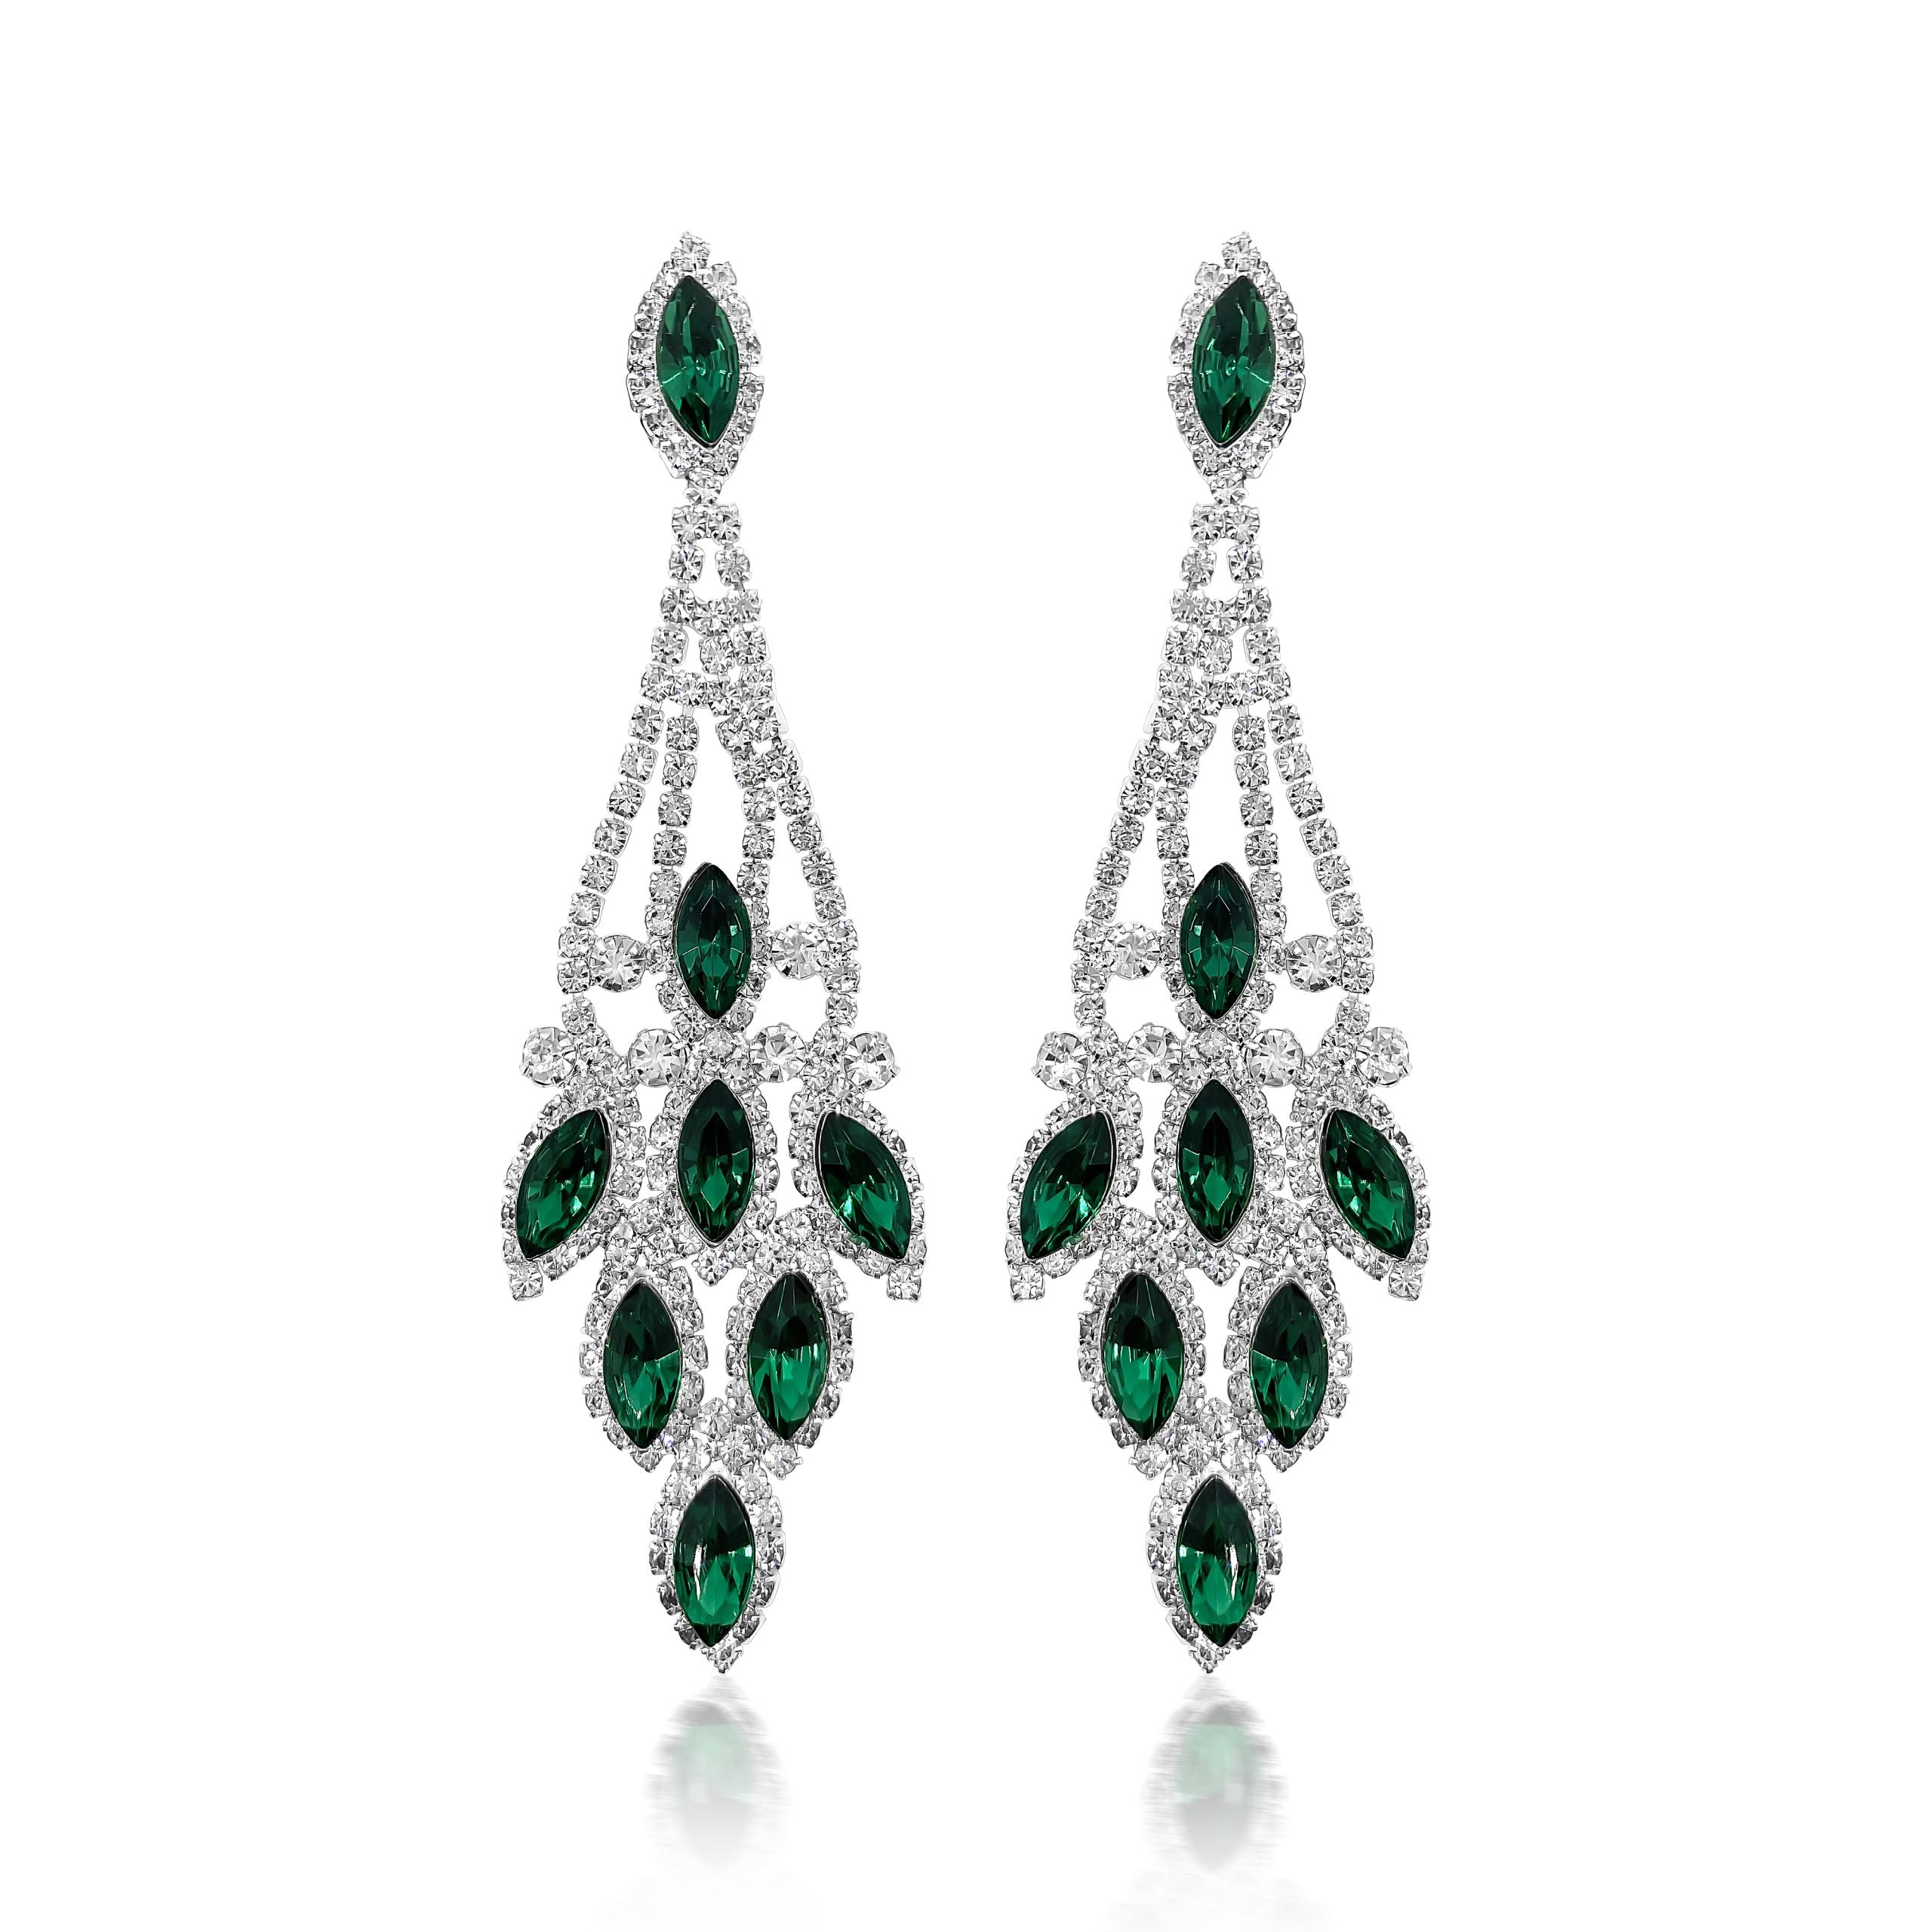 Indira - clear emerald rhinestone jewelry set